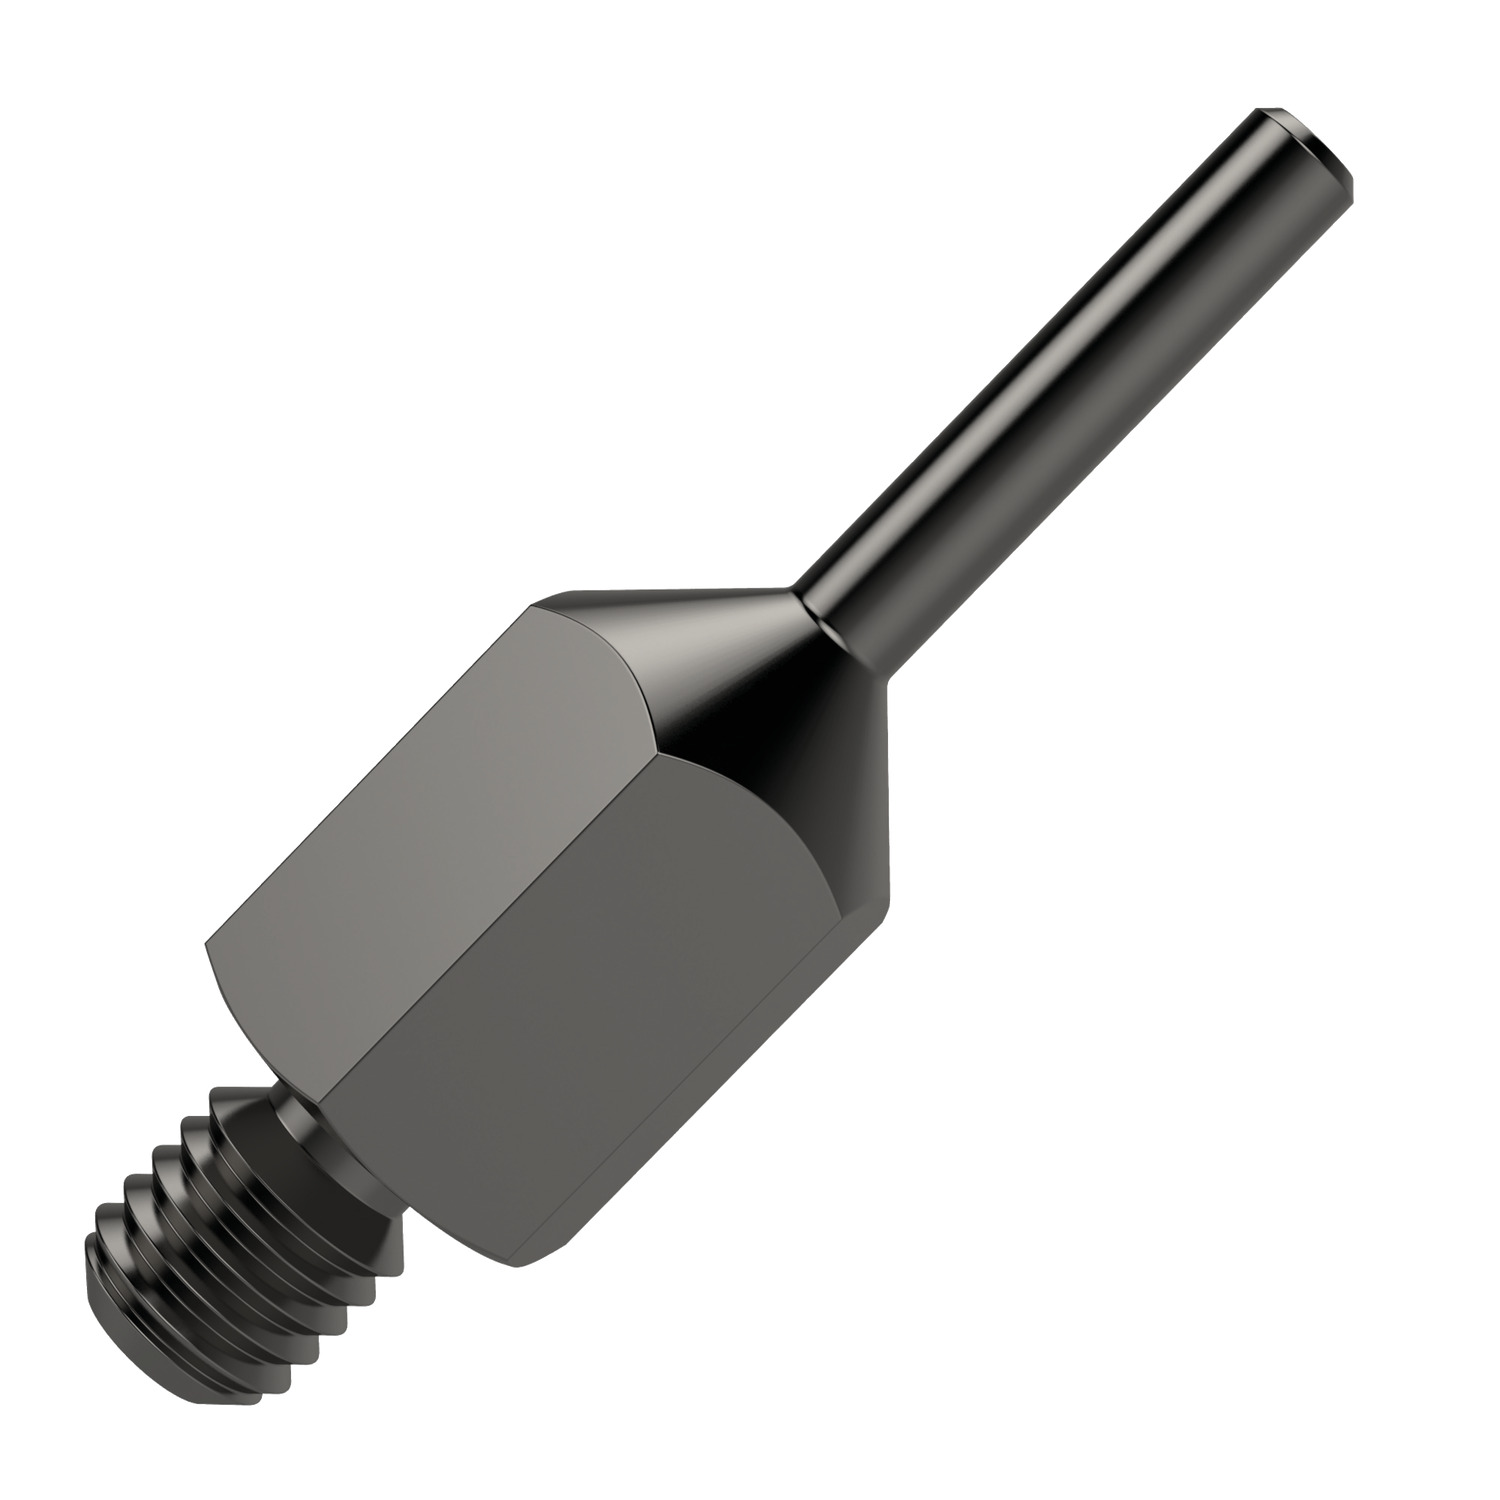 36440.W0404 Locating Pins - Heat treated steel. Male Thread - 30 - M 6 - 4